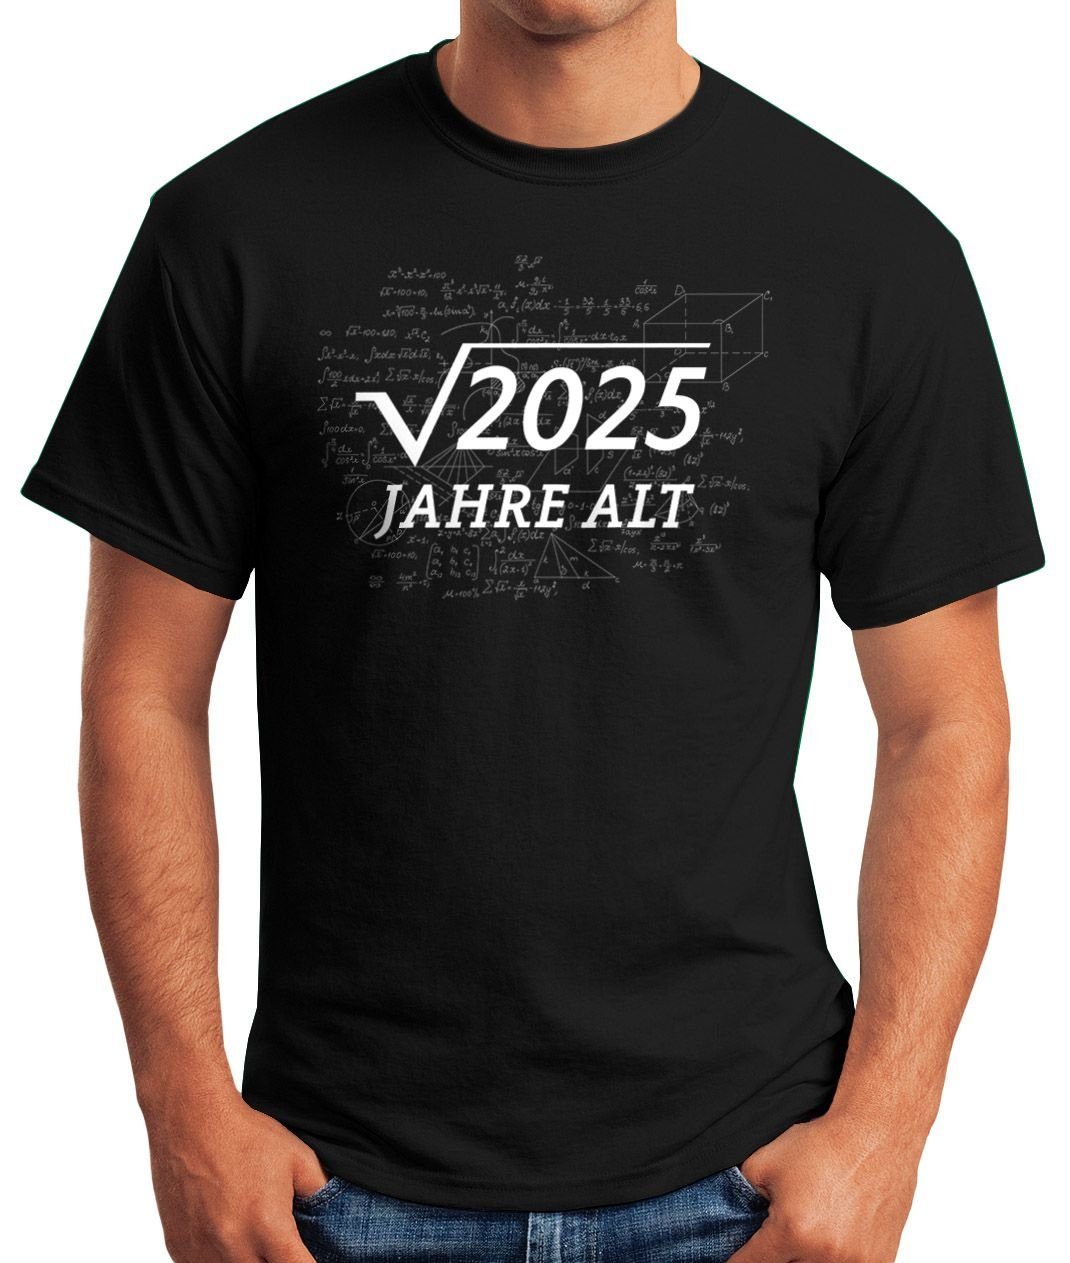 MoonWorks Print-Shirt mit Moonworks® 45 Print Herren Fun-Shirt Geschenk Wurzel T-Shirt schwarz Geburtstag Mathe